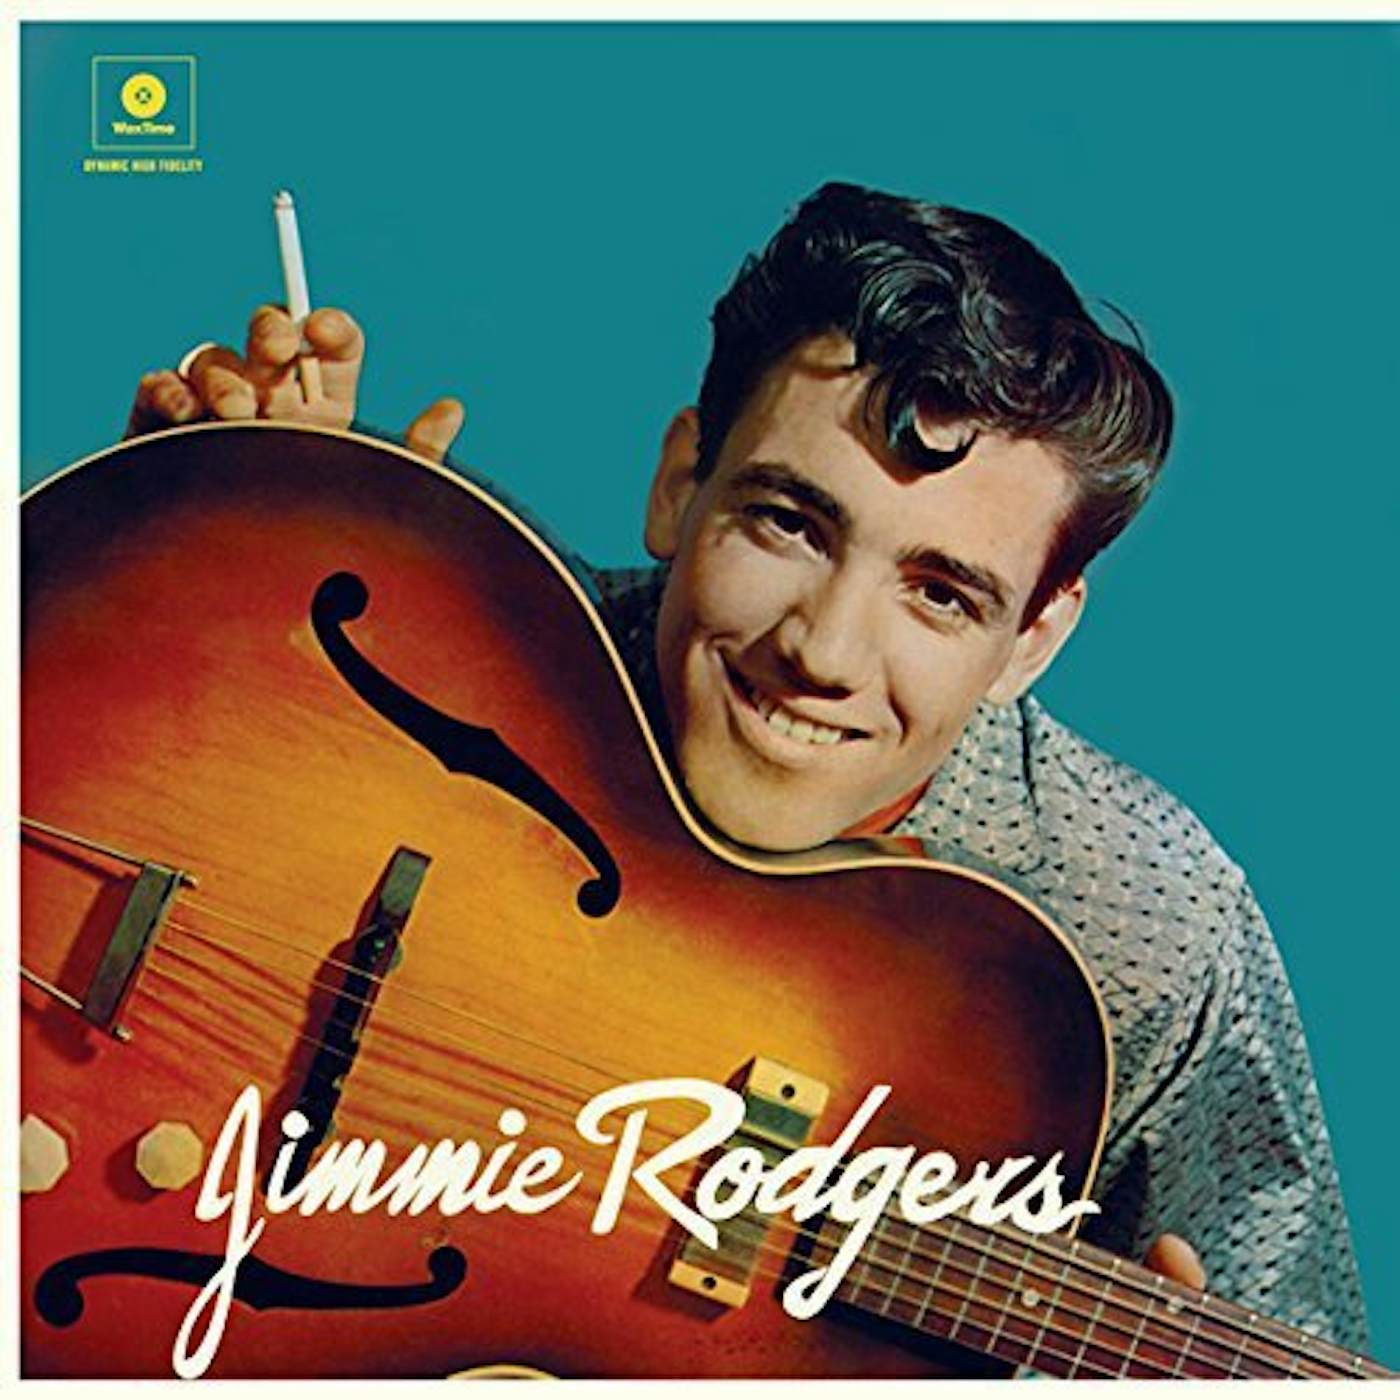 JIMMIE RODGERS (DEBUT ALBUM) + 2 BONUS TRACKS Vinyl Record